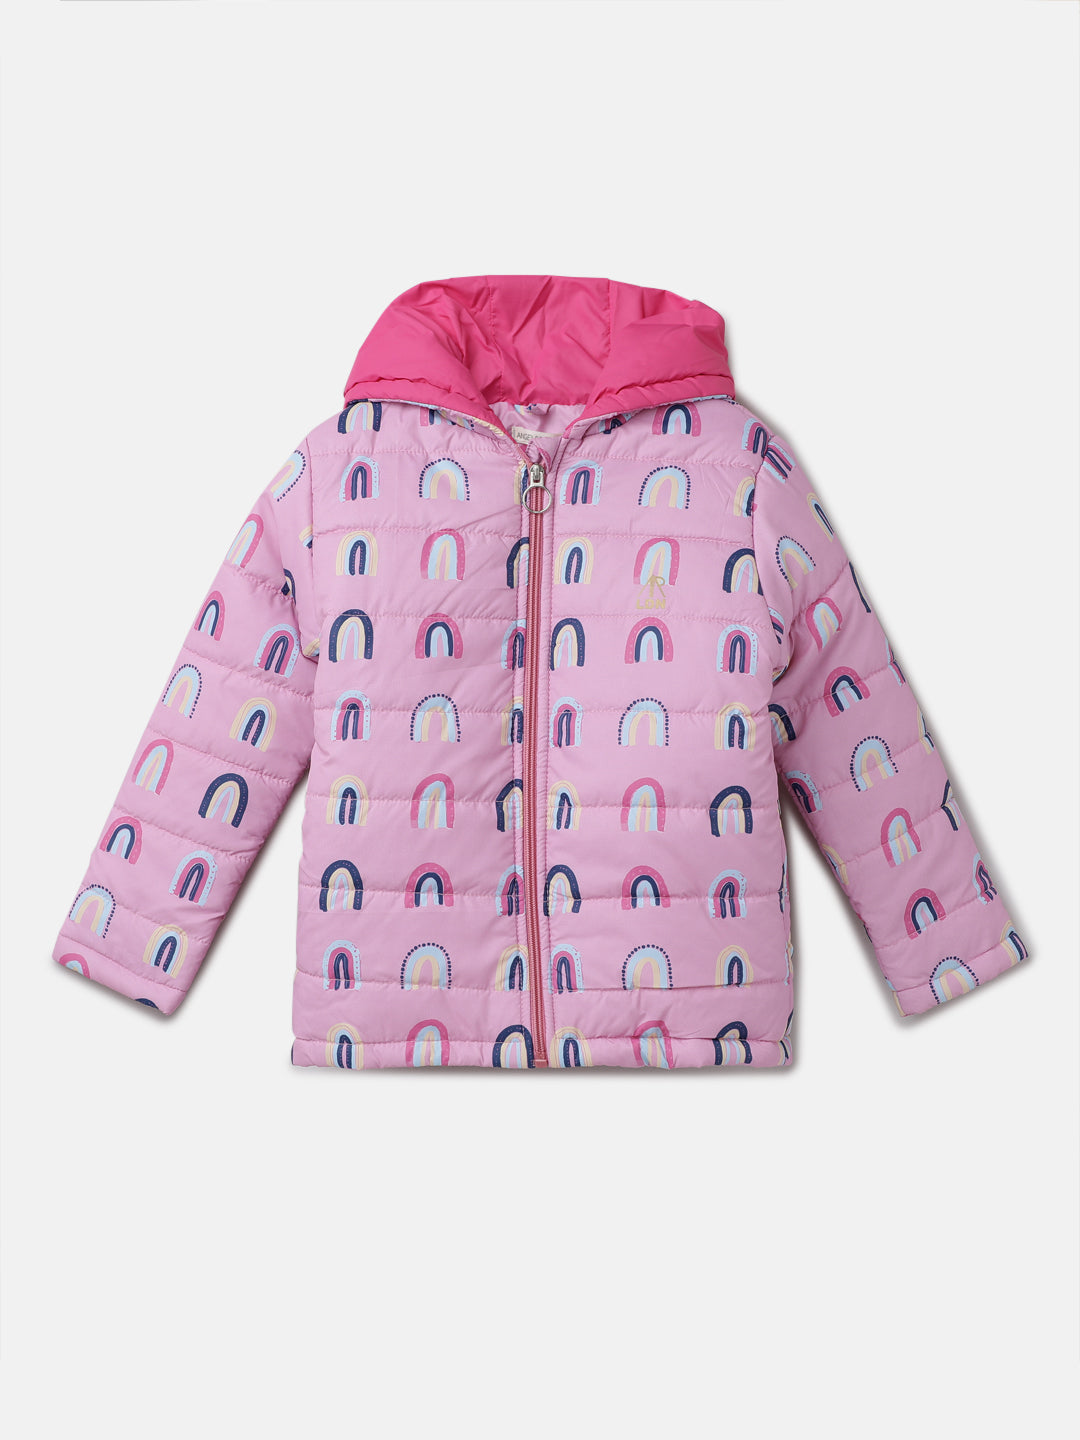 Girls Rainbow Printed Puffa Jacket with Hood